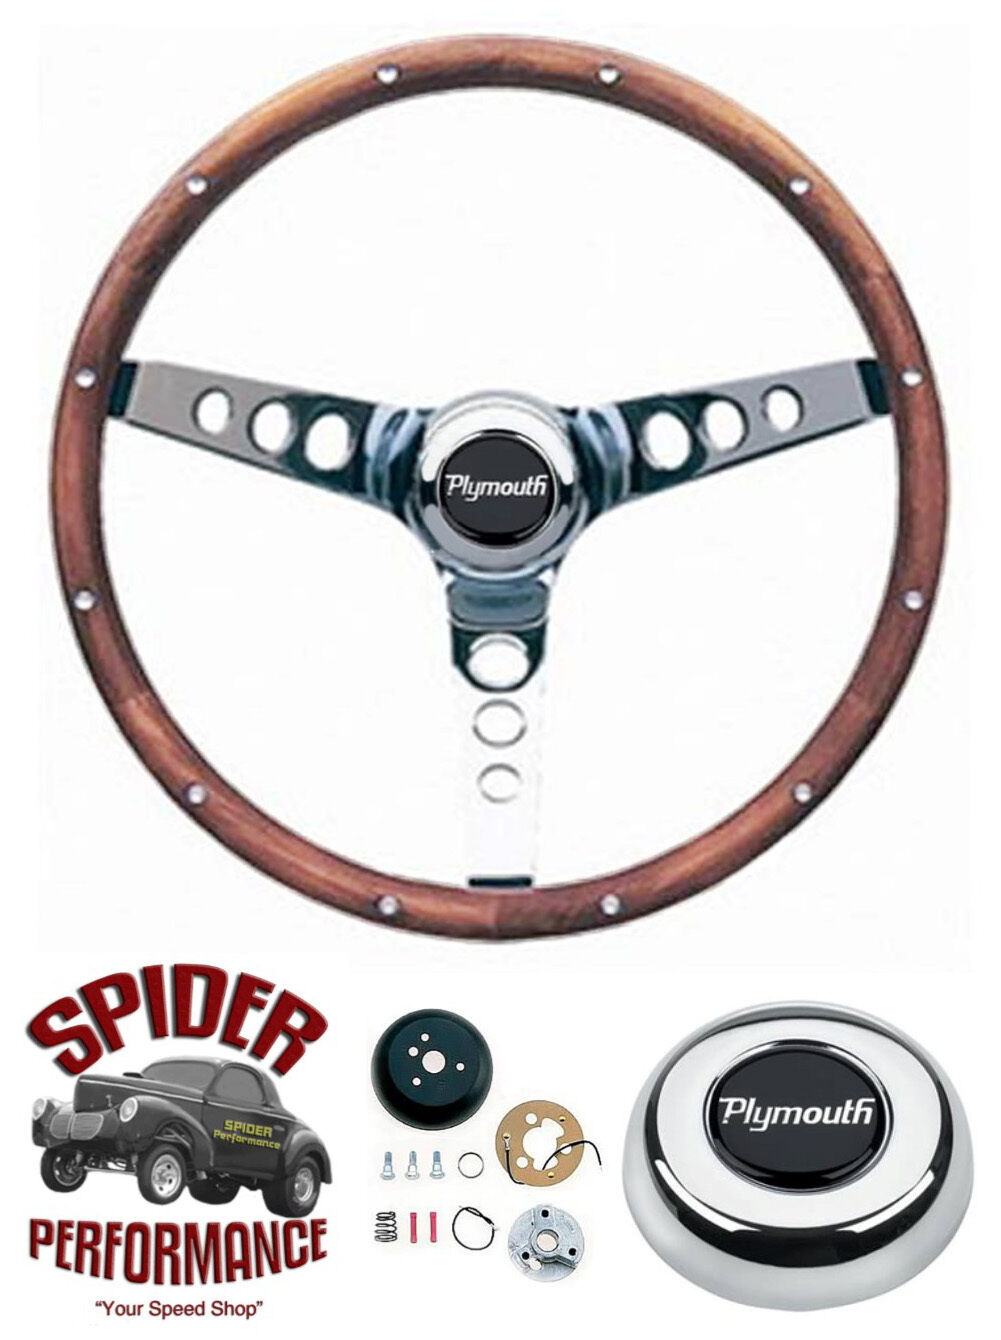 1961-1966 Plymouth steering wheel 13 1/2